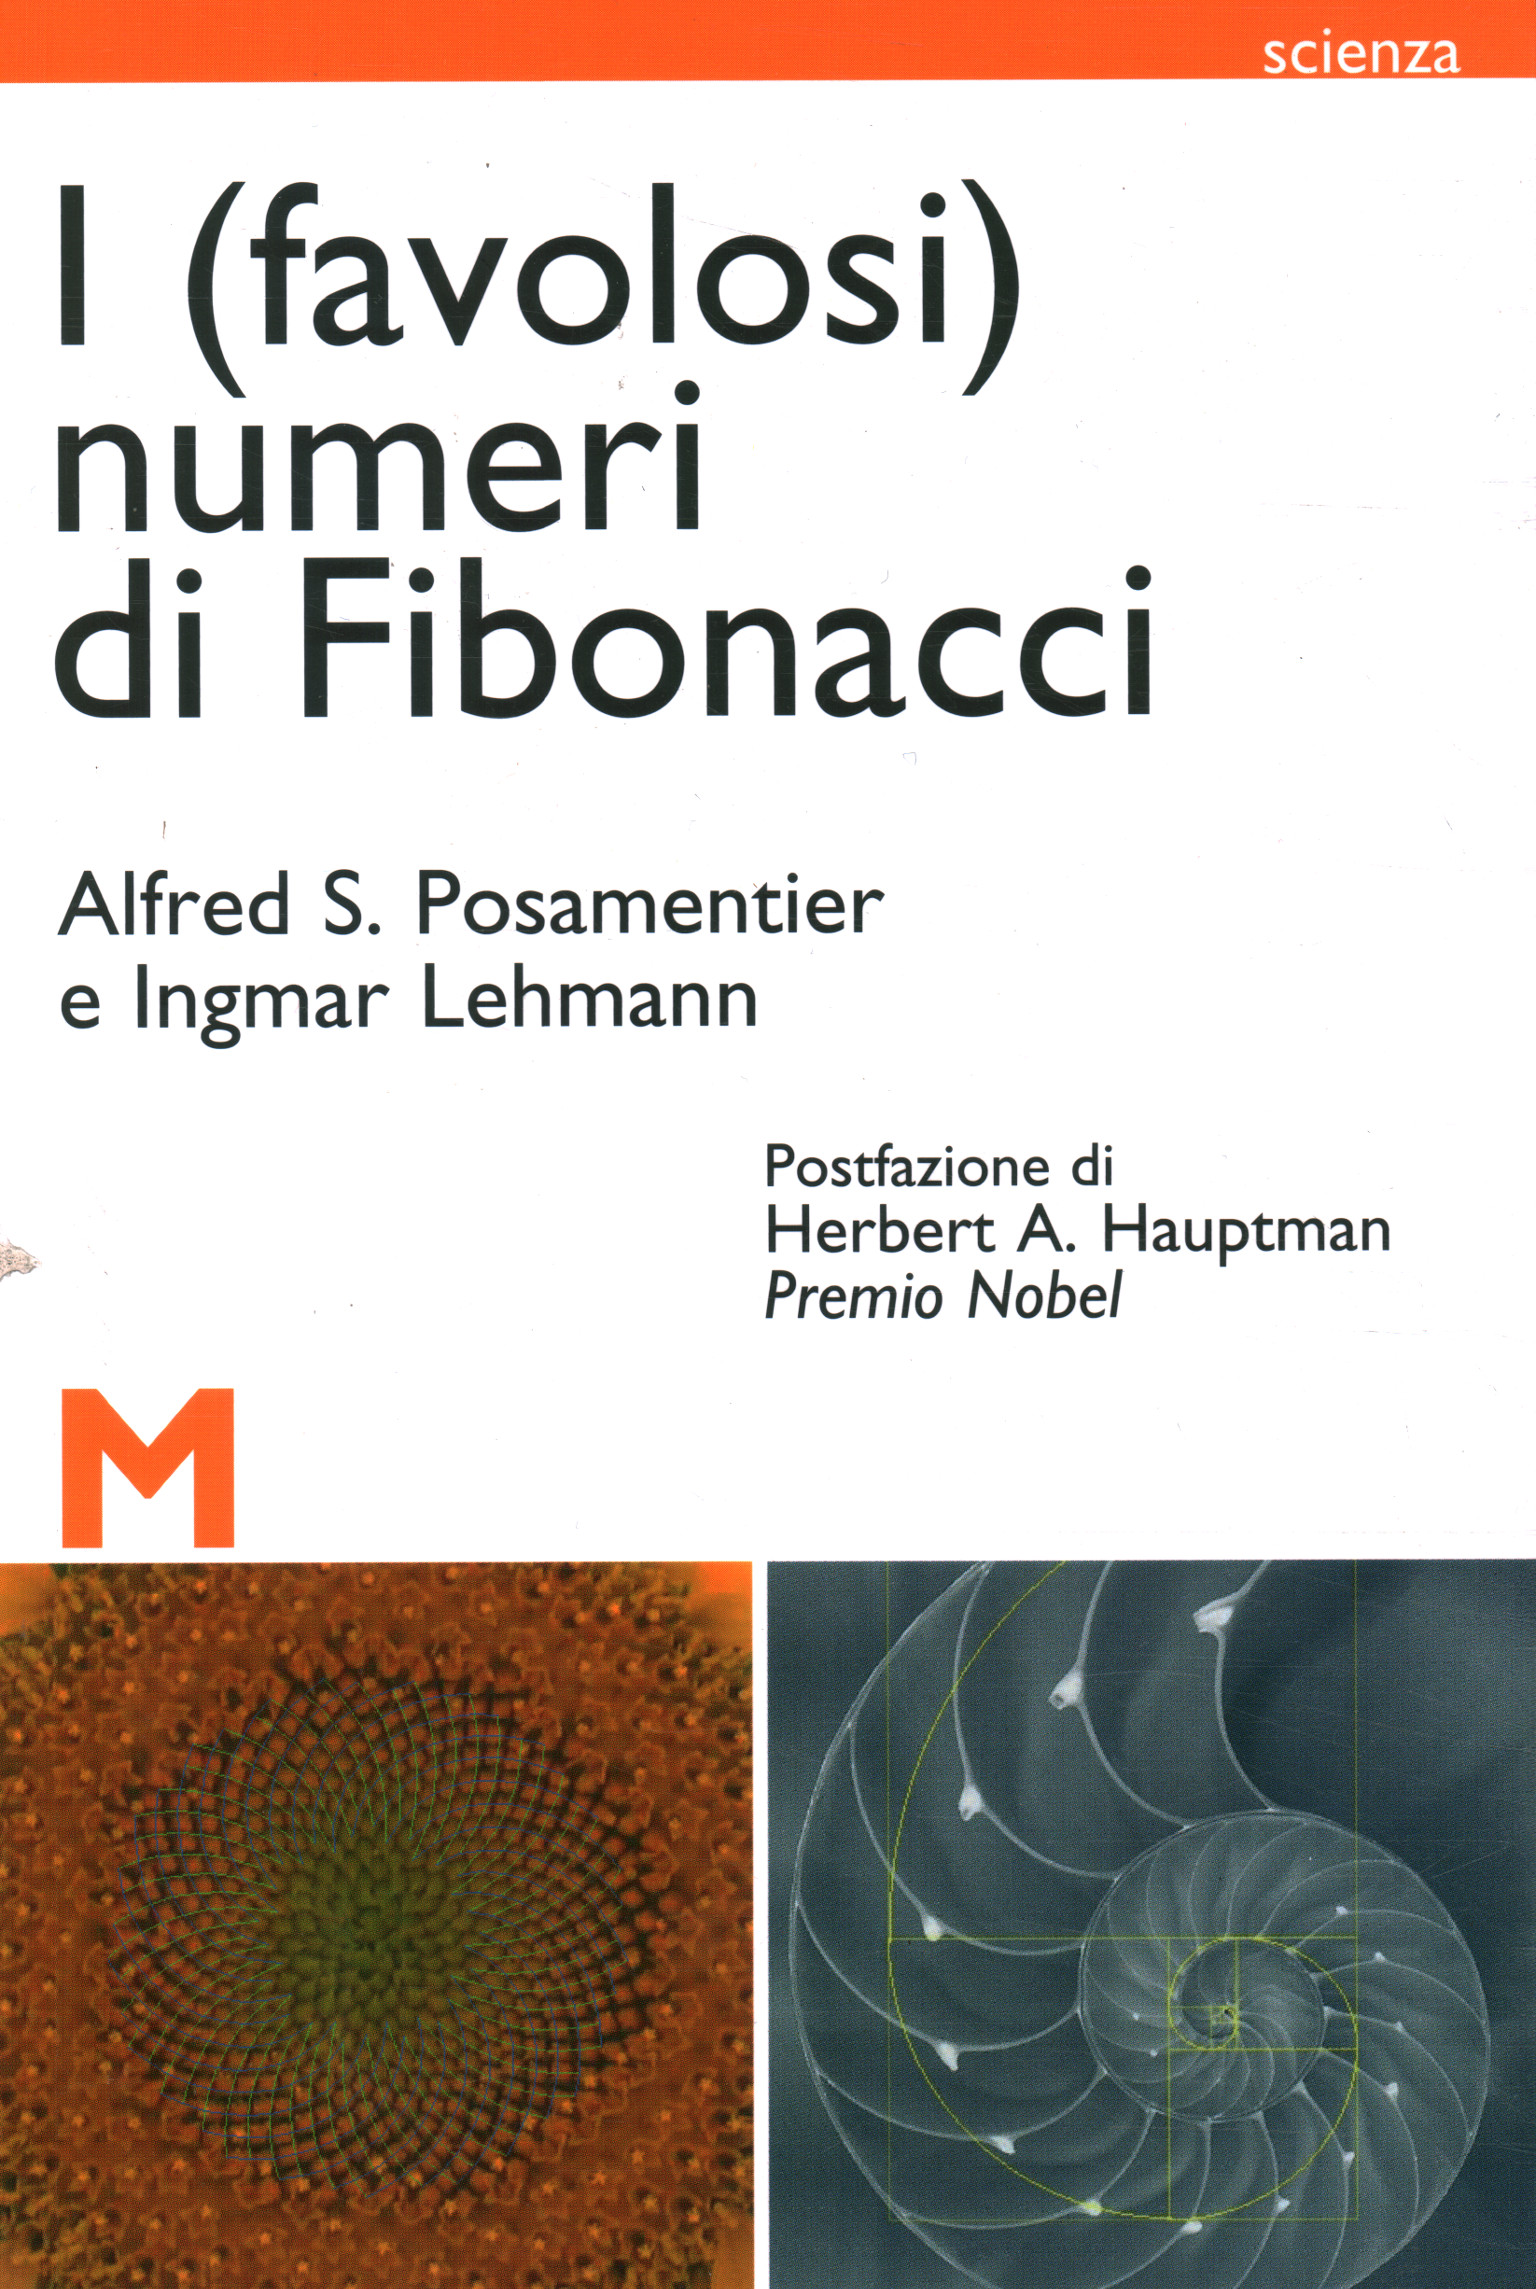 The (fabulous) Fibonacci numbers